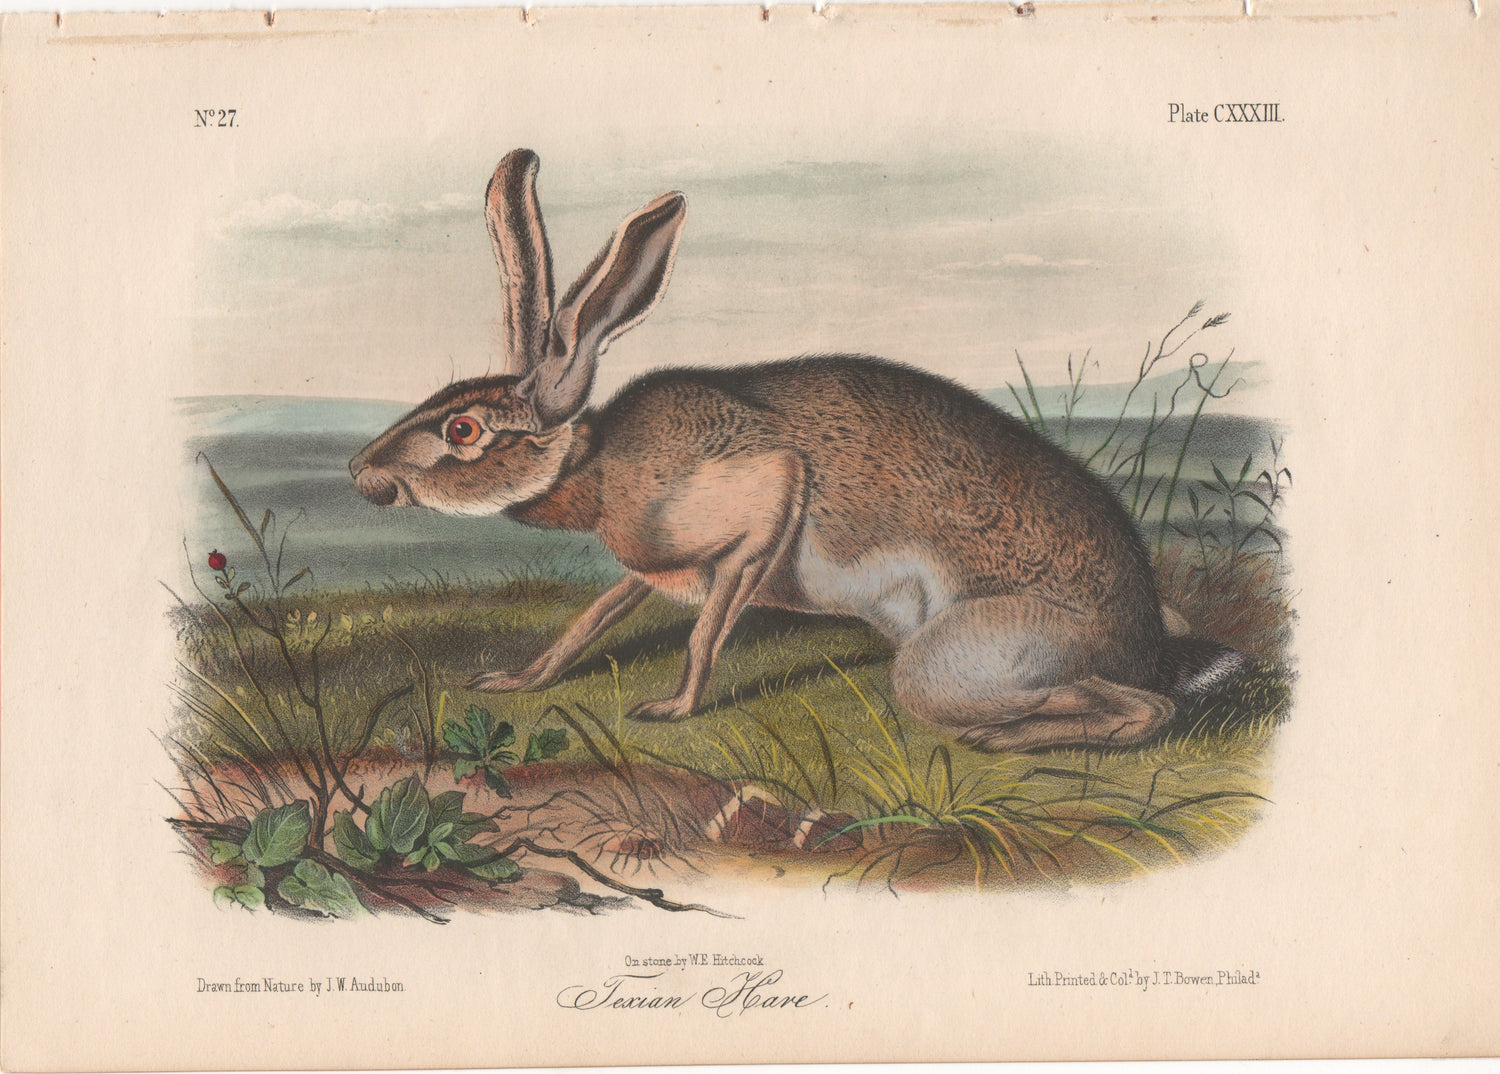 Audubon Original Octavo Mammal, Texan Hare plate 133